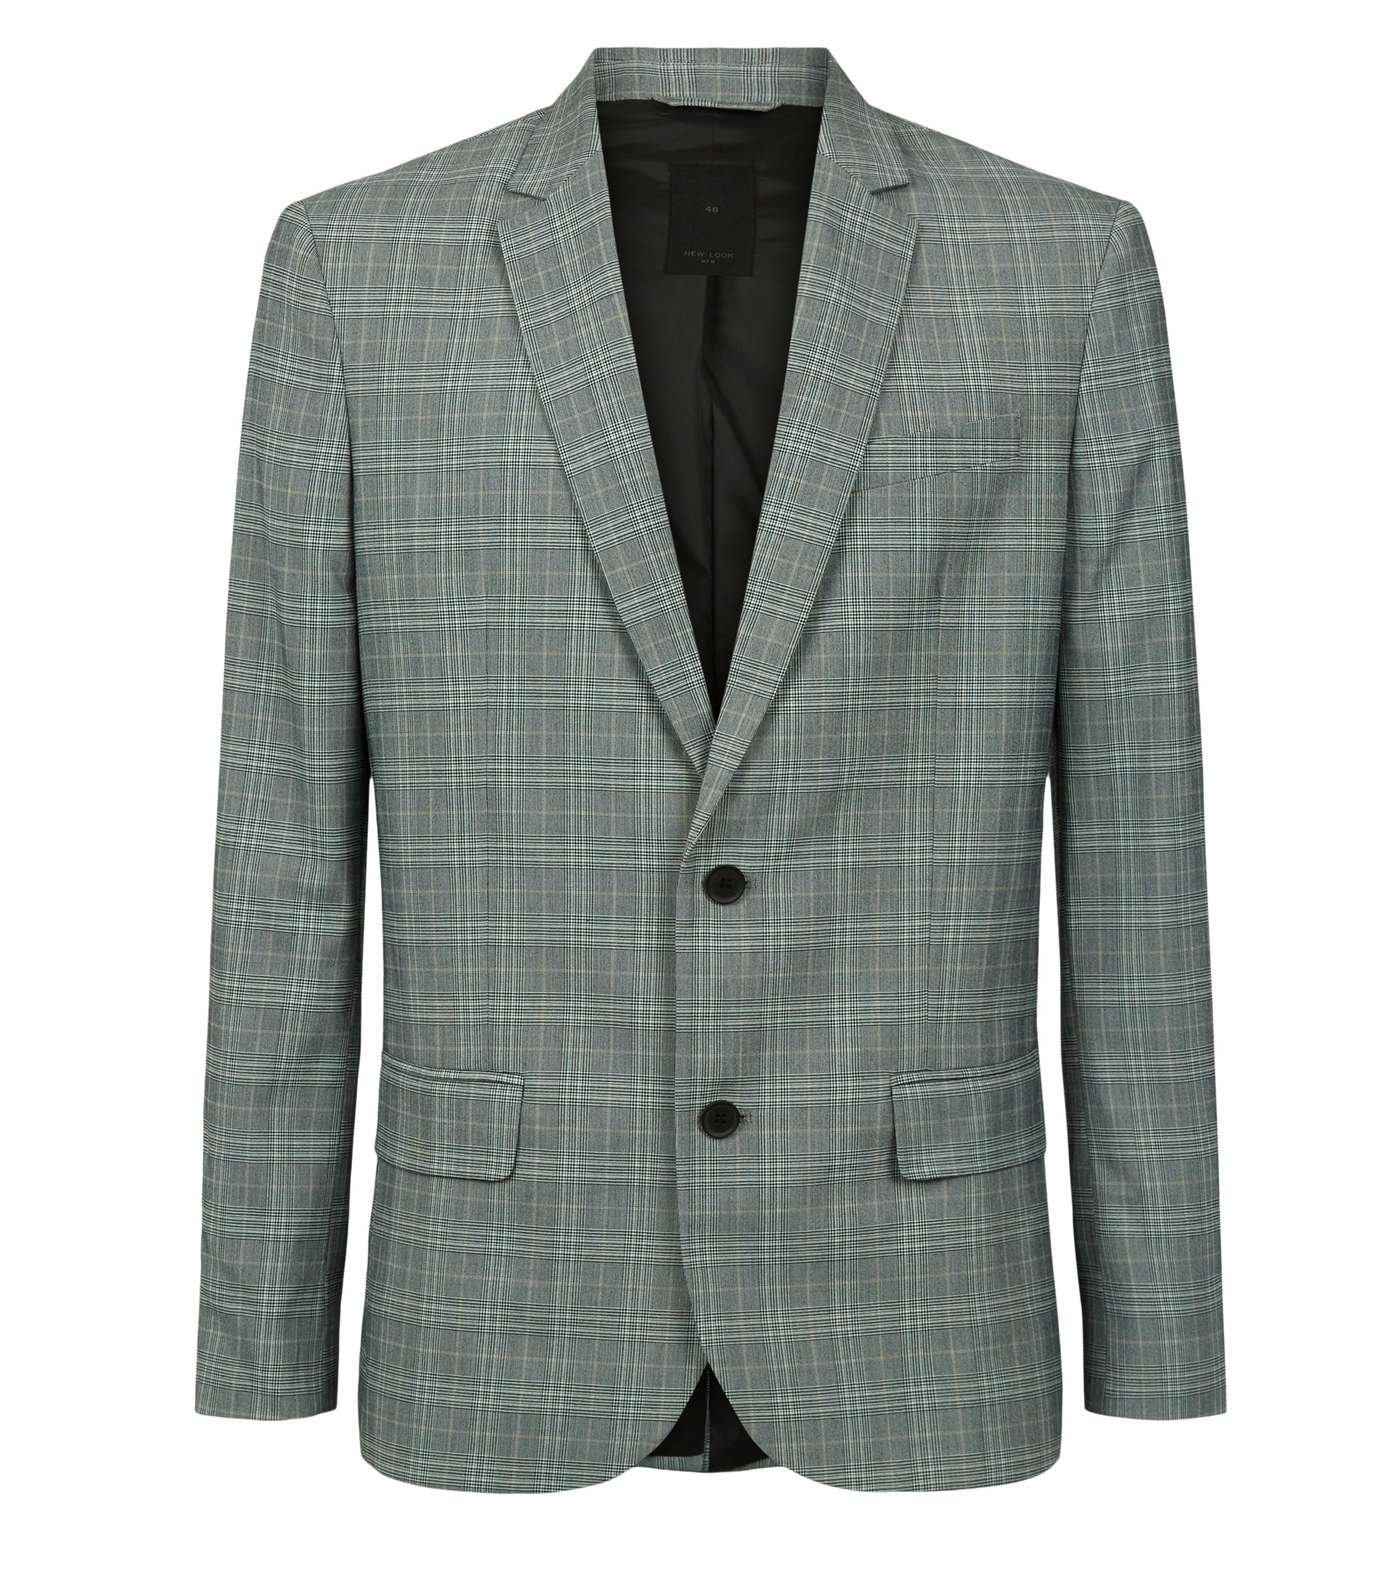 Pale Grey Check Suit Jacket Image 4